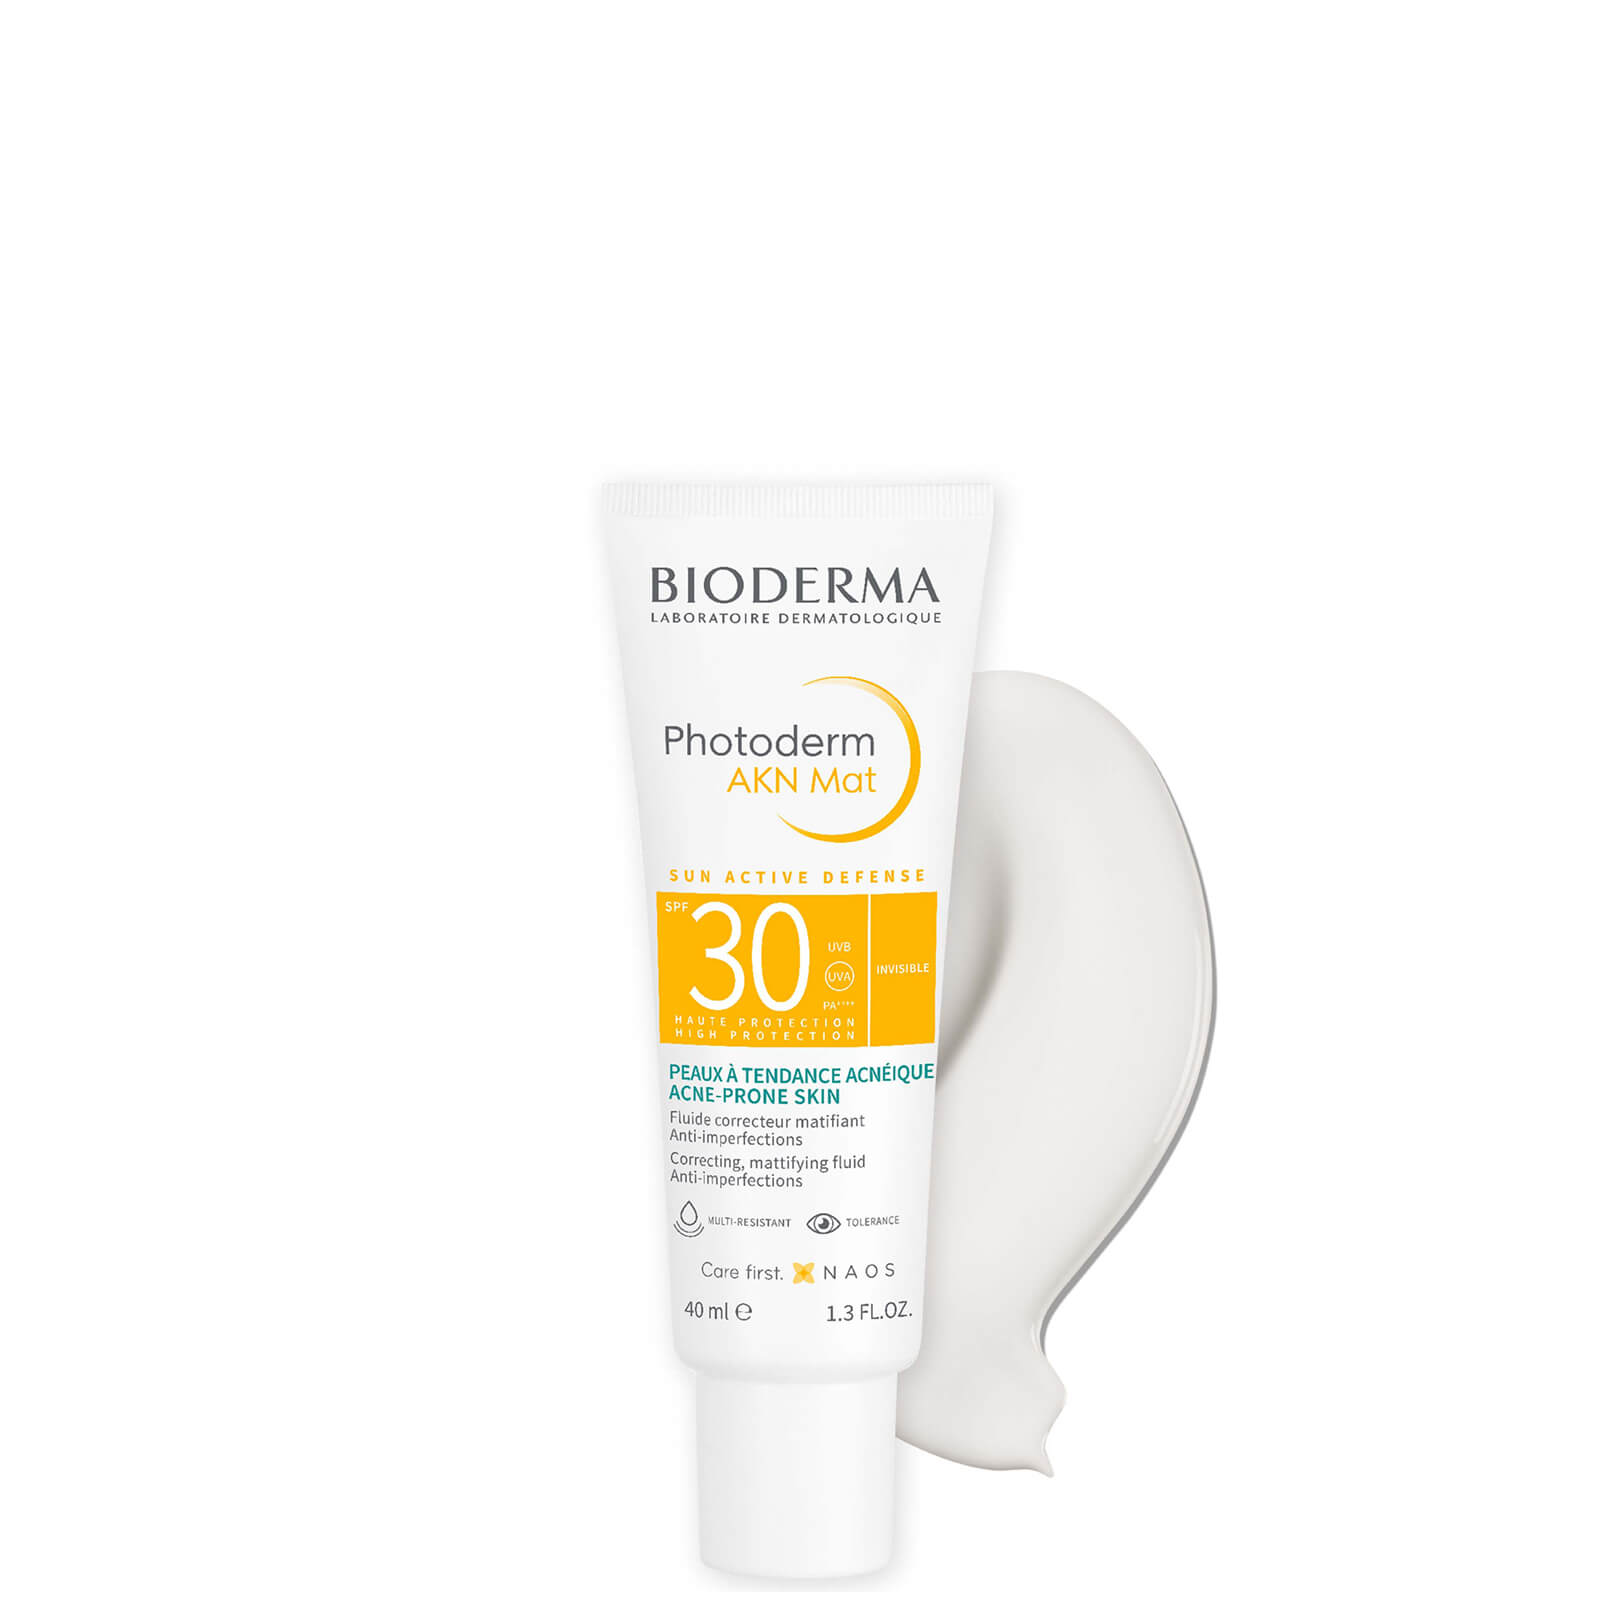 Image of Bioderma Photoderm Anti-Blemish Sunscreen SPF30 40ml